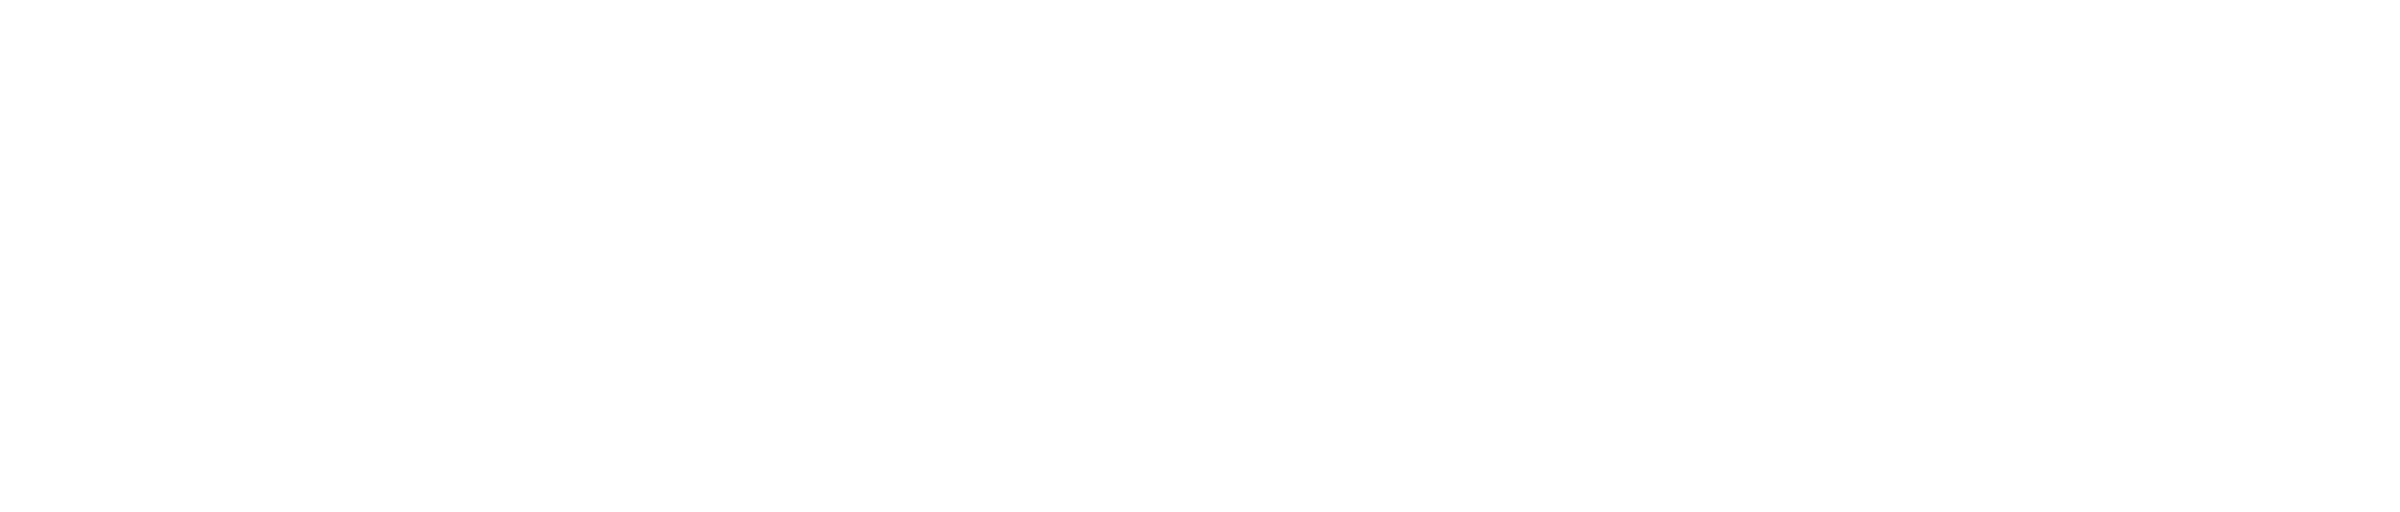 Pencco Logo - 1 color